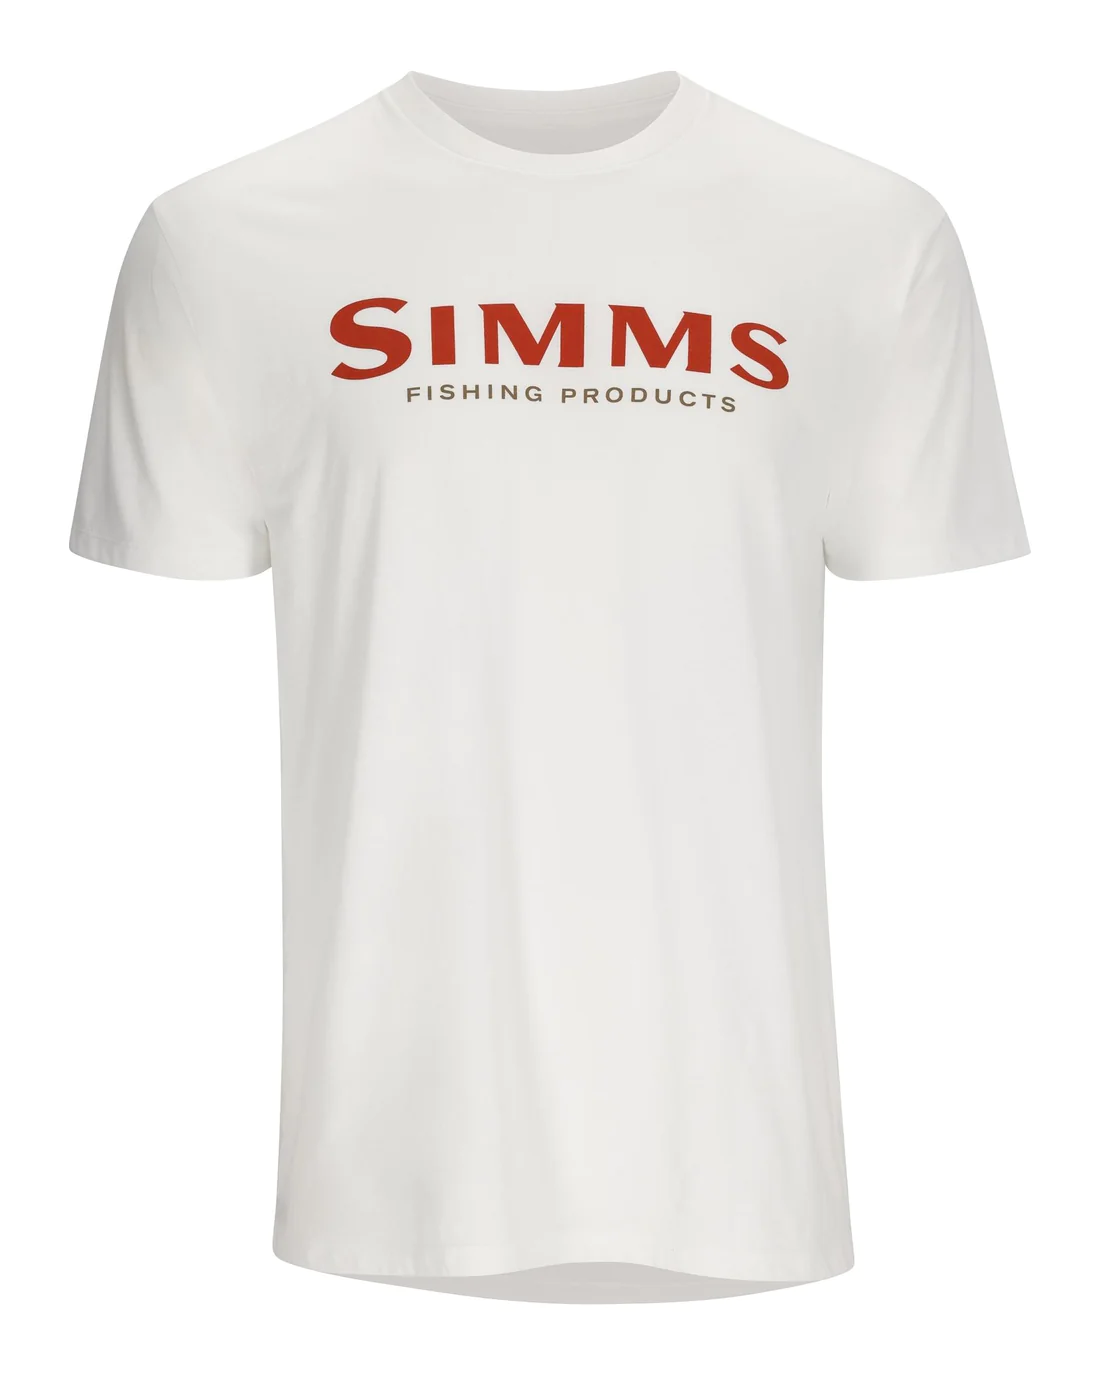 SIMMS LOGO  T-SHIRT White